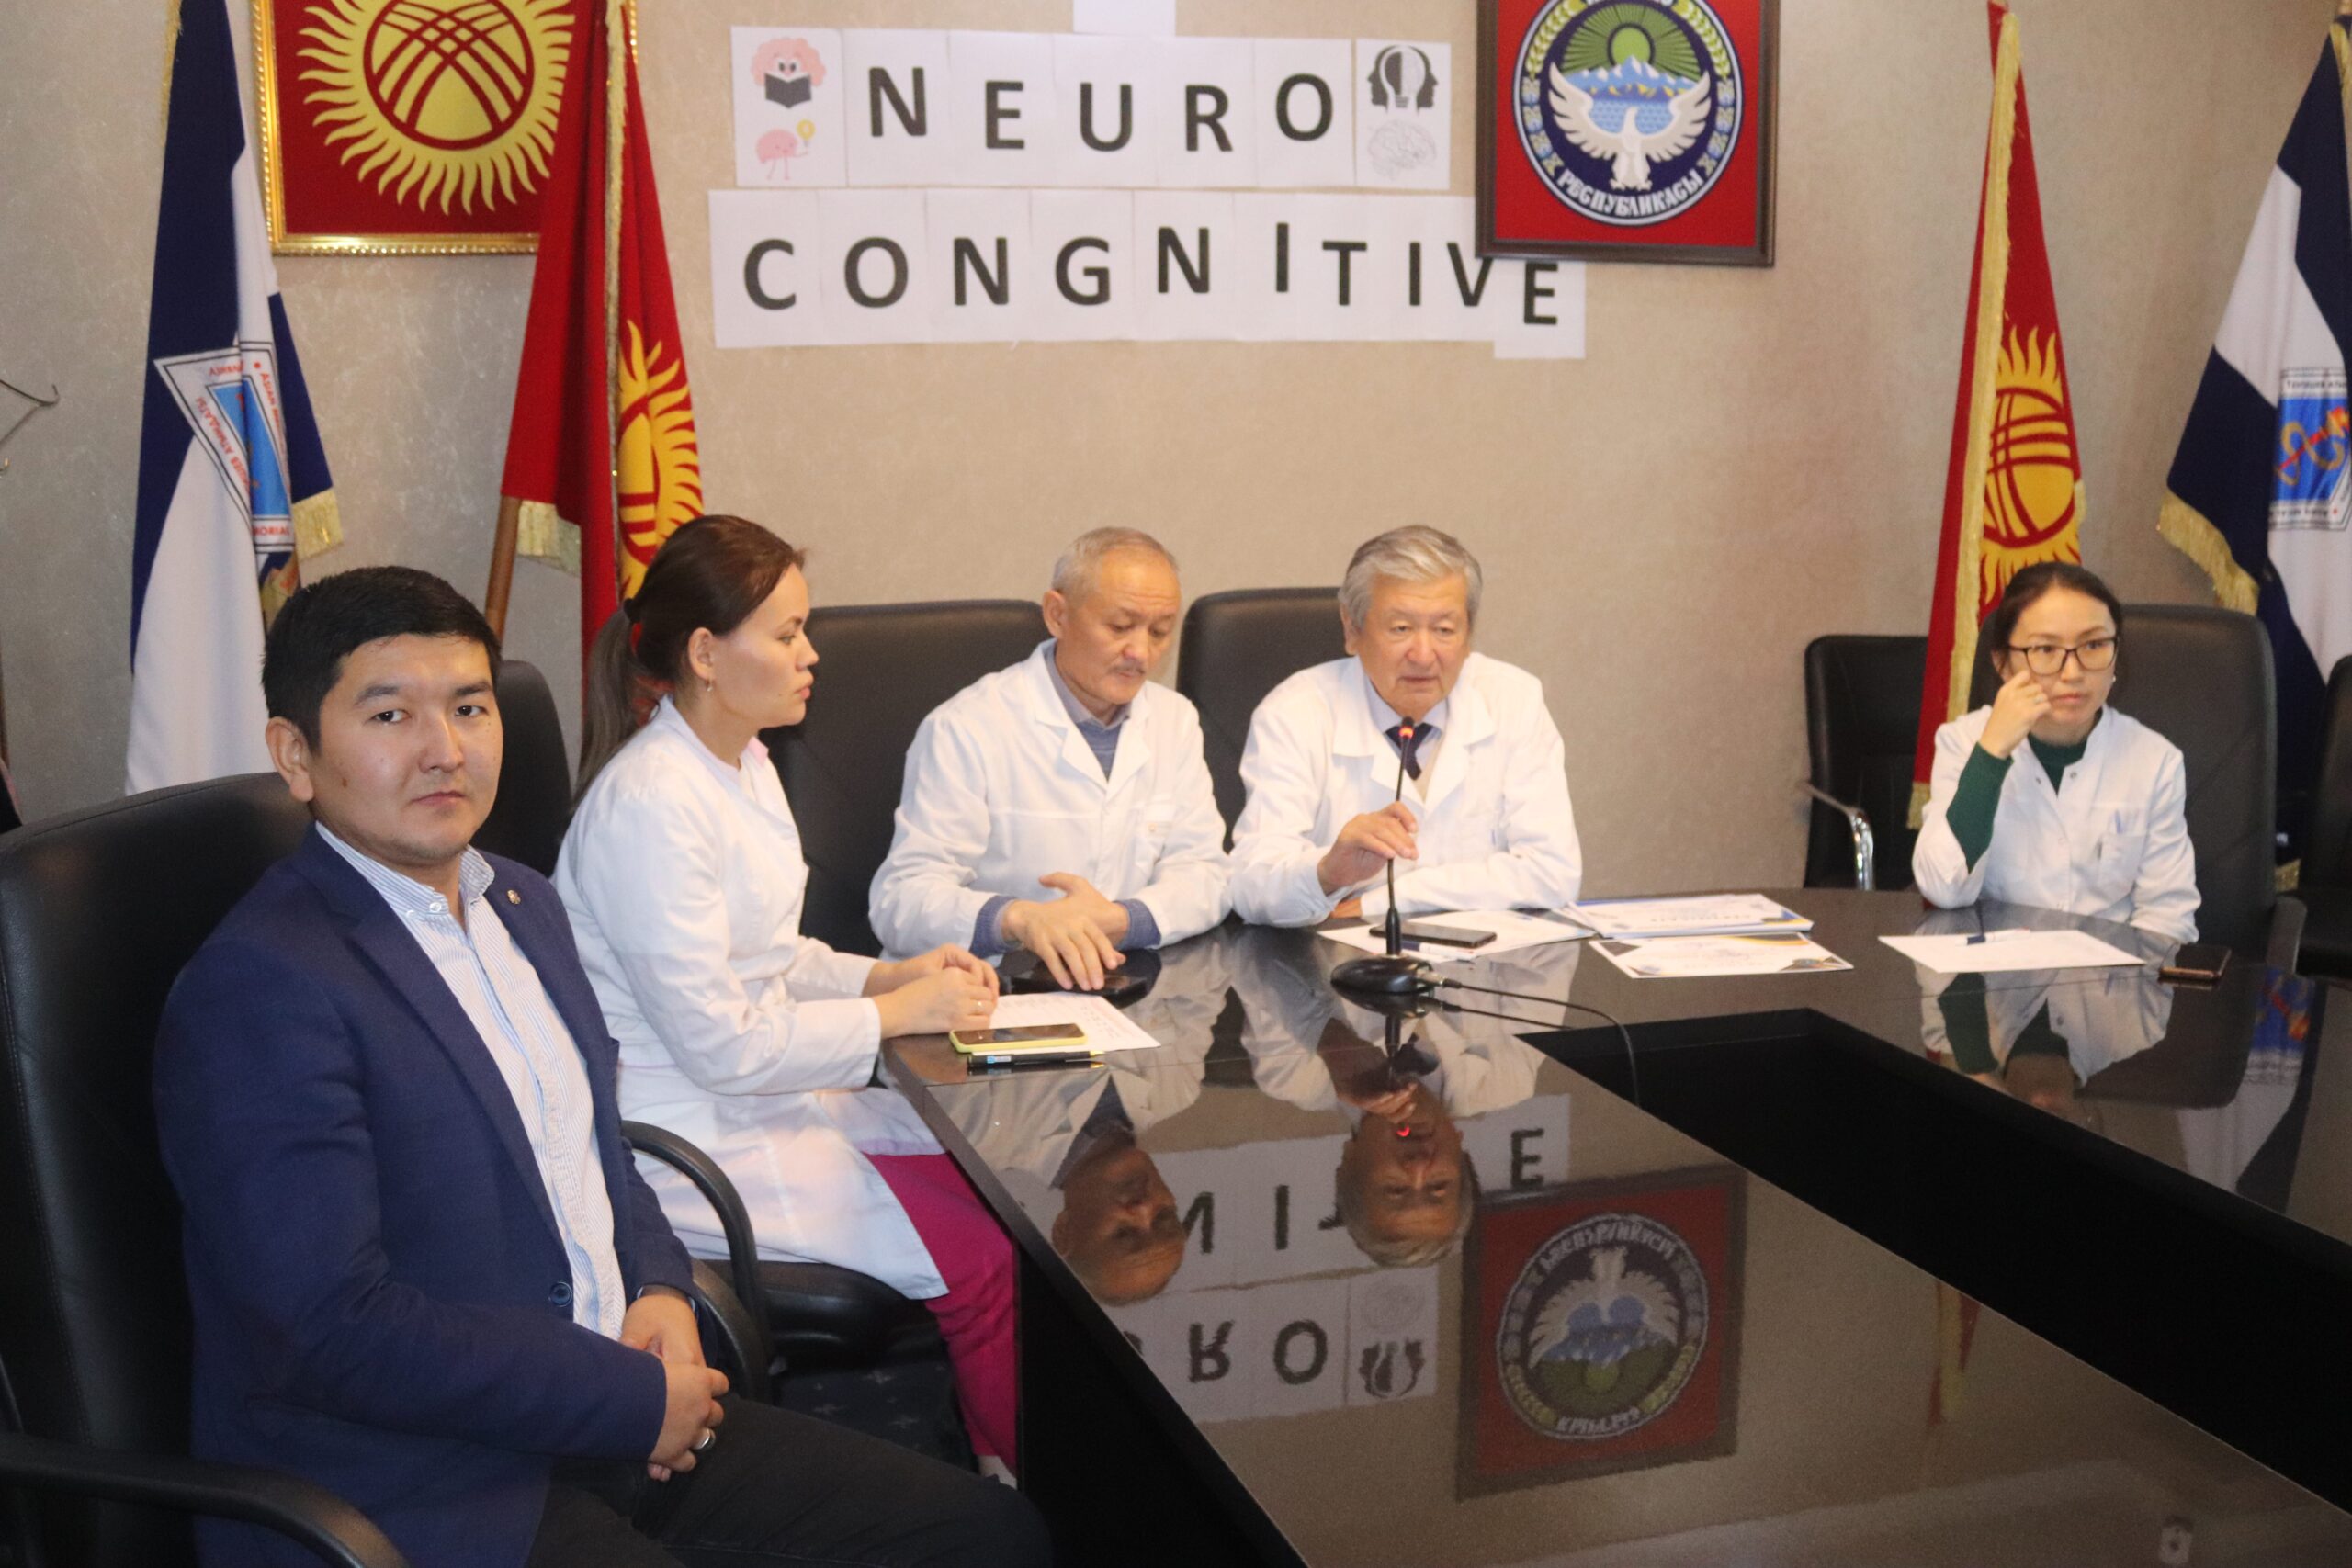 Neurocognitive Seminar organized by the Student Scientific Society